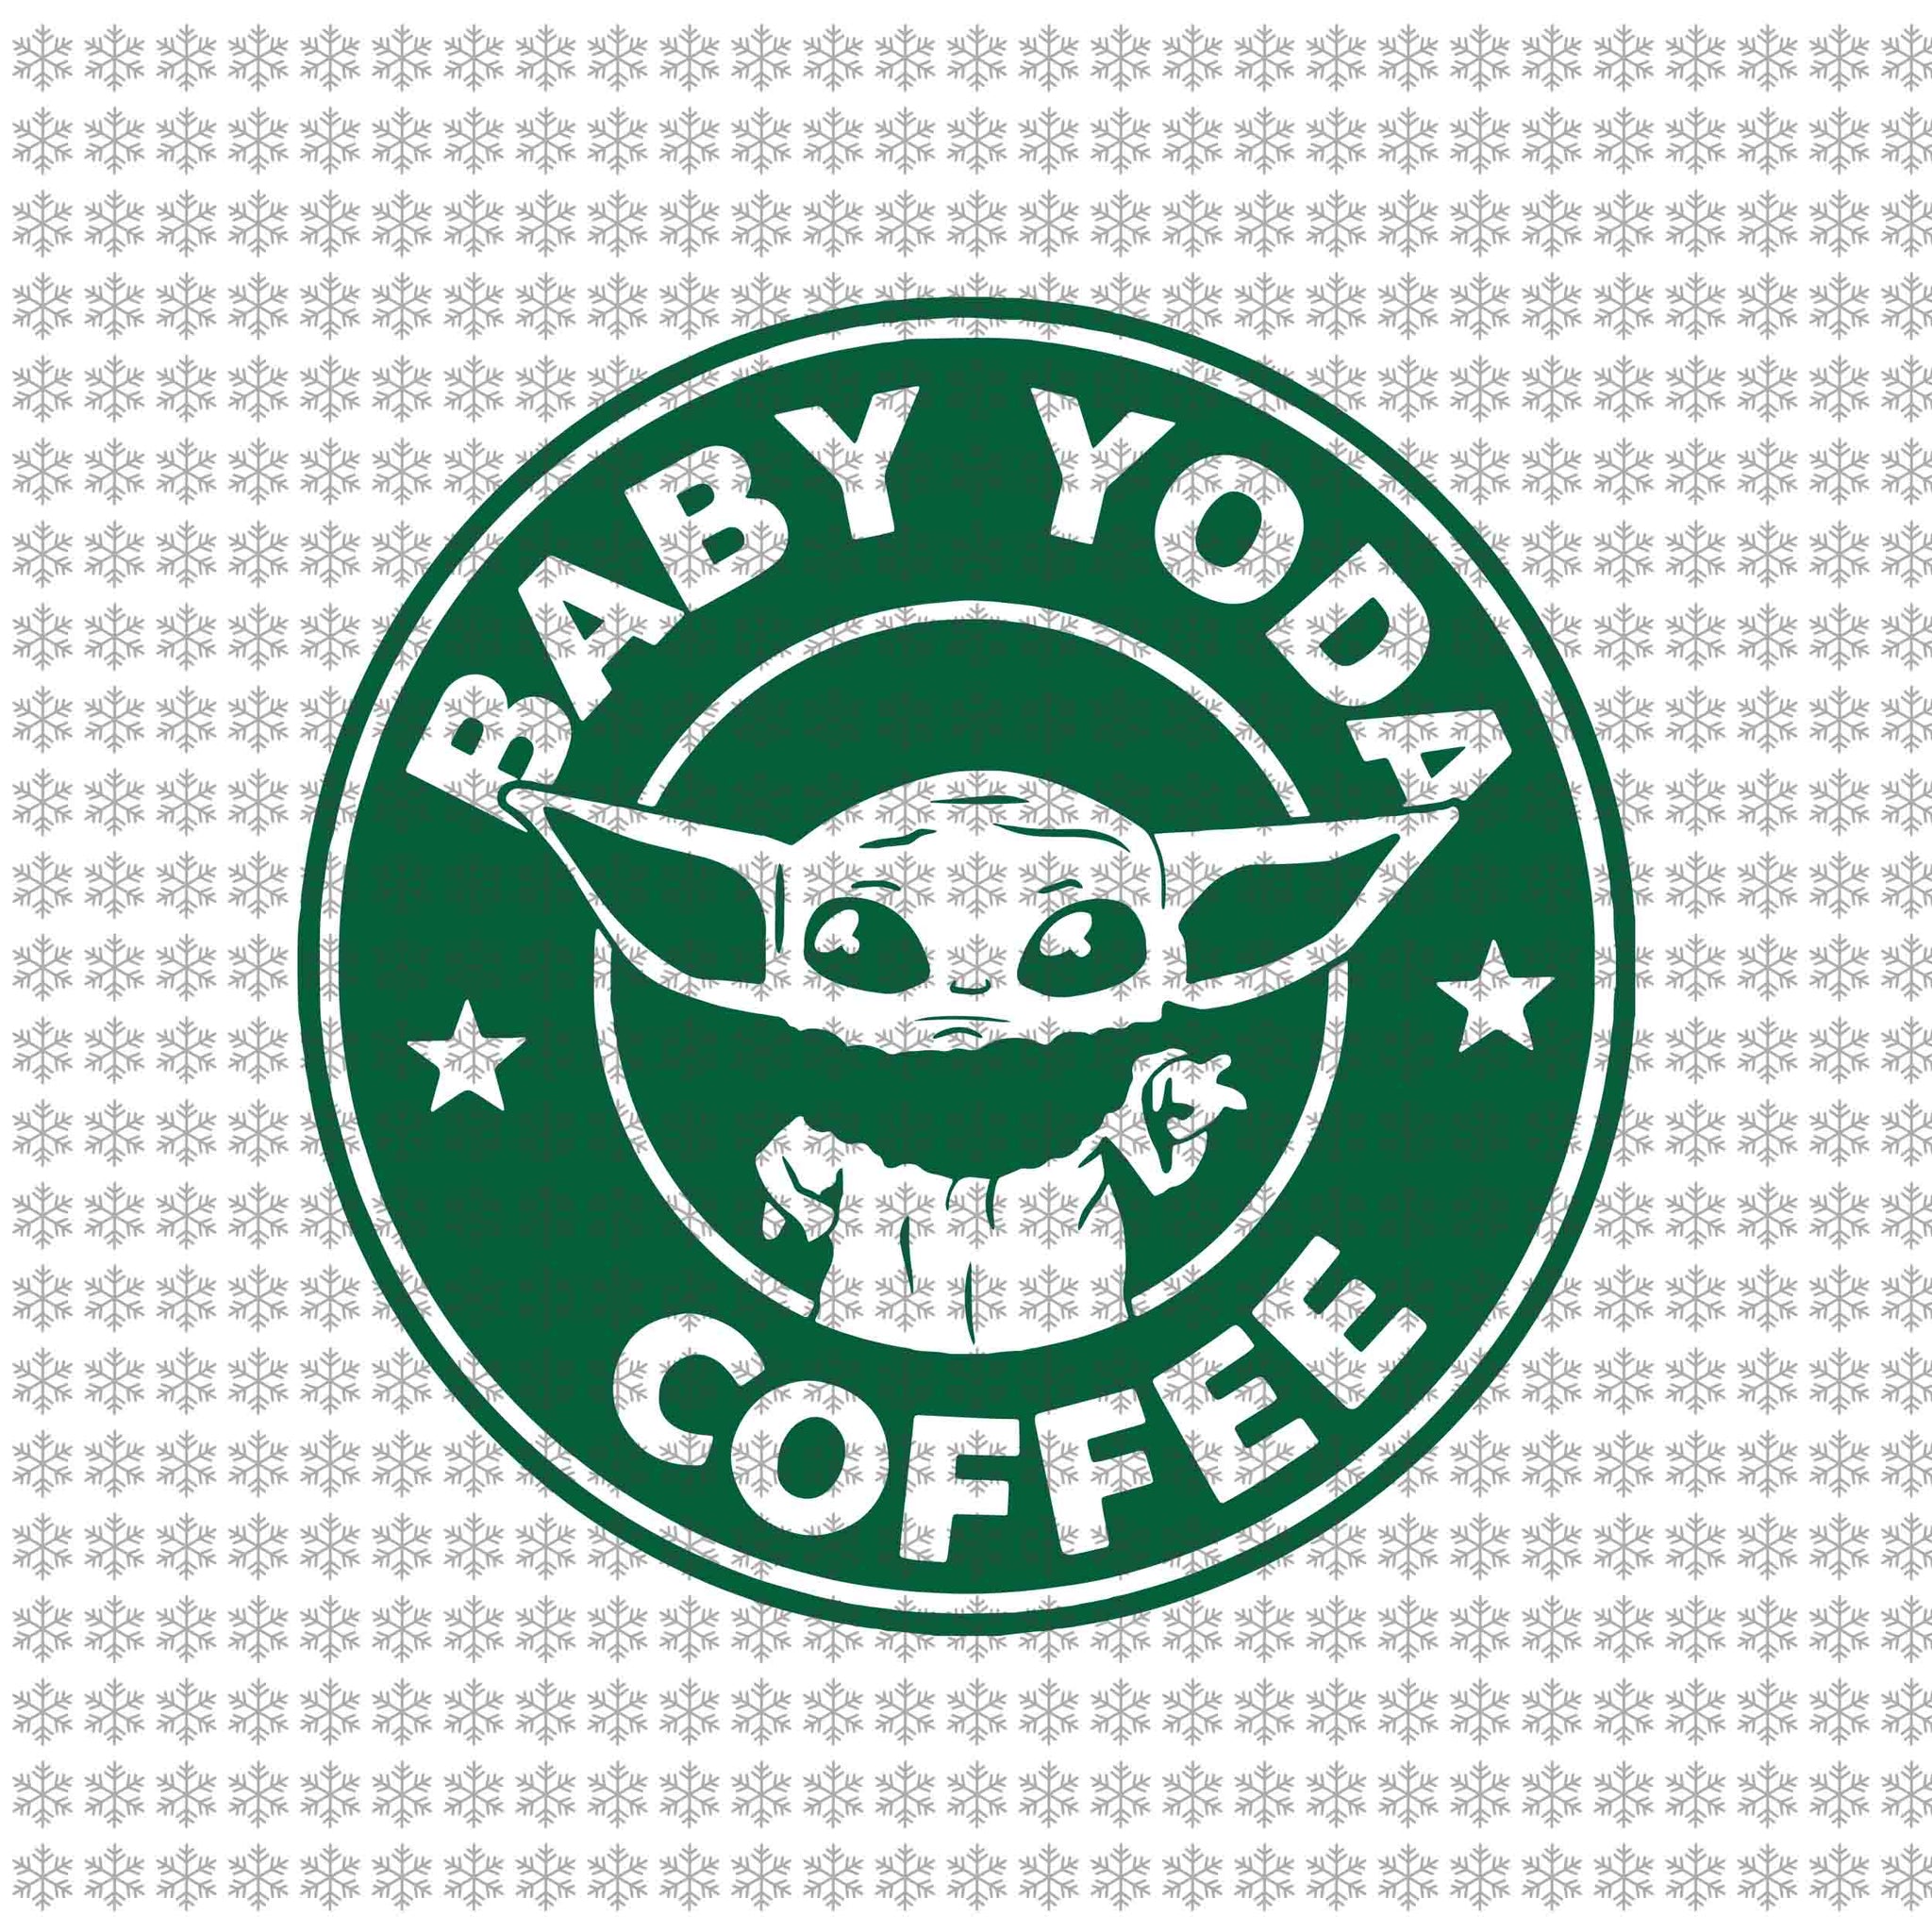 Baby yoda coffee, Baby yoda svg, baby yoda vector, baby yoda digital file, star wars svg, star wars vector, The Mandalorian the child svg